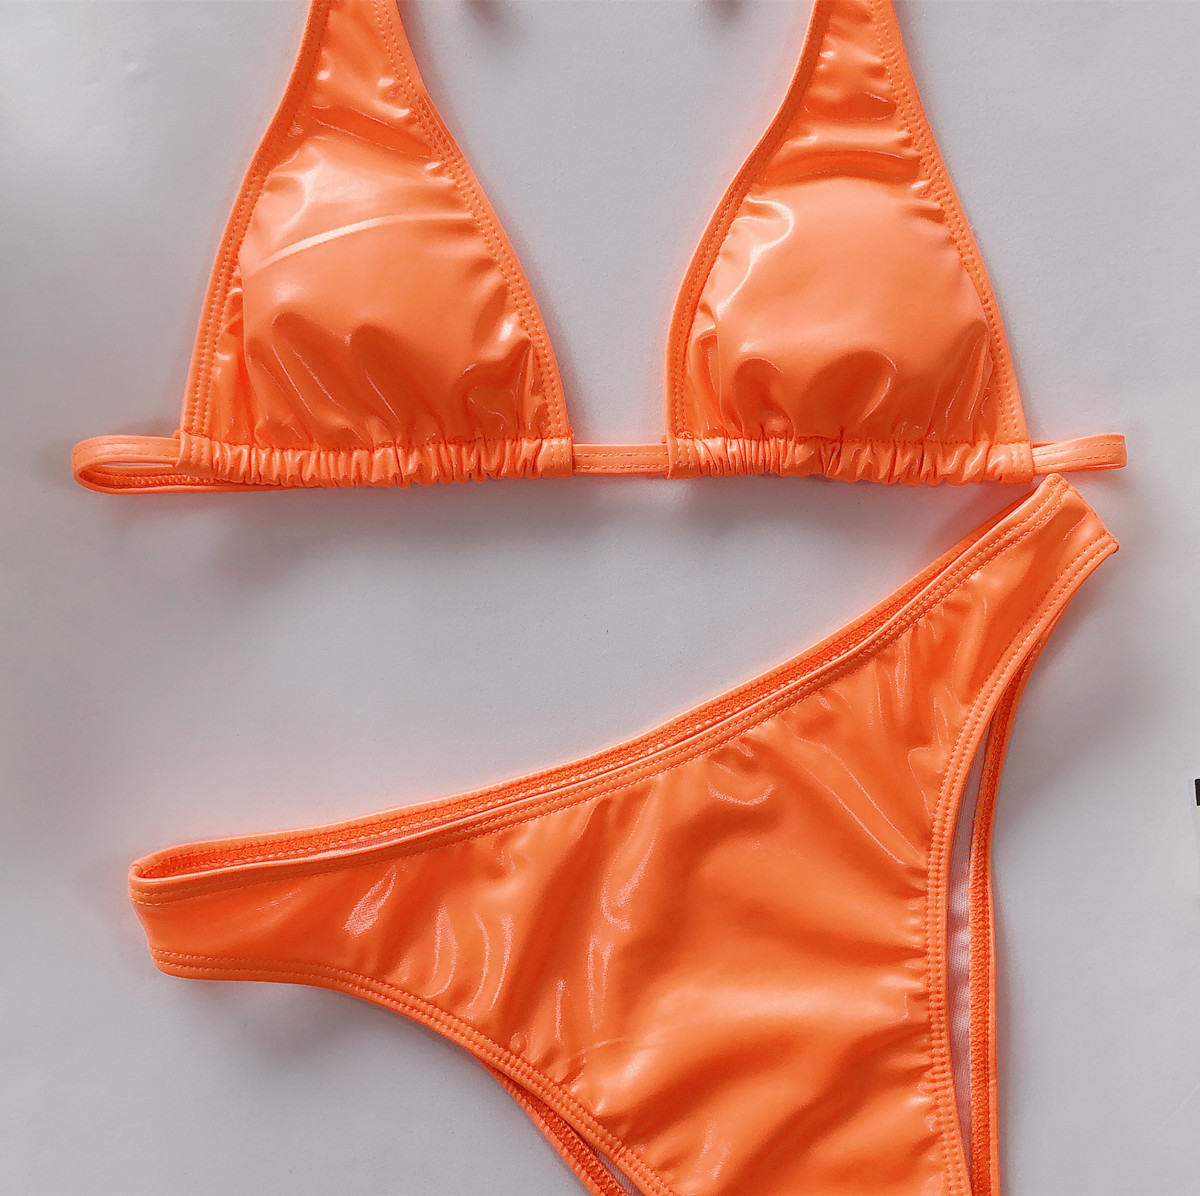 New Hot Bikini Swimwear Ladies Split Halter Bikini NSDA2186